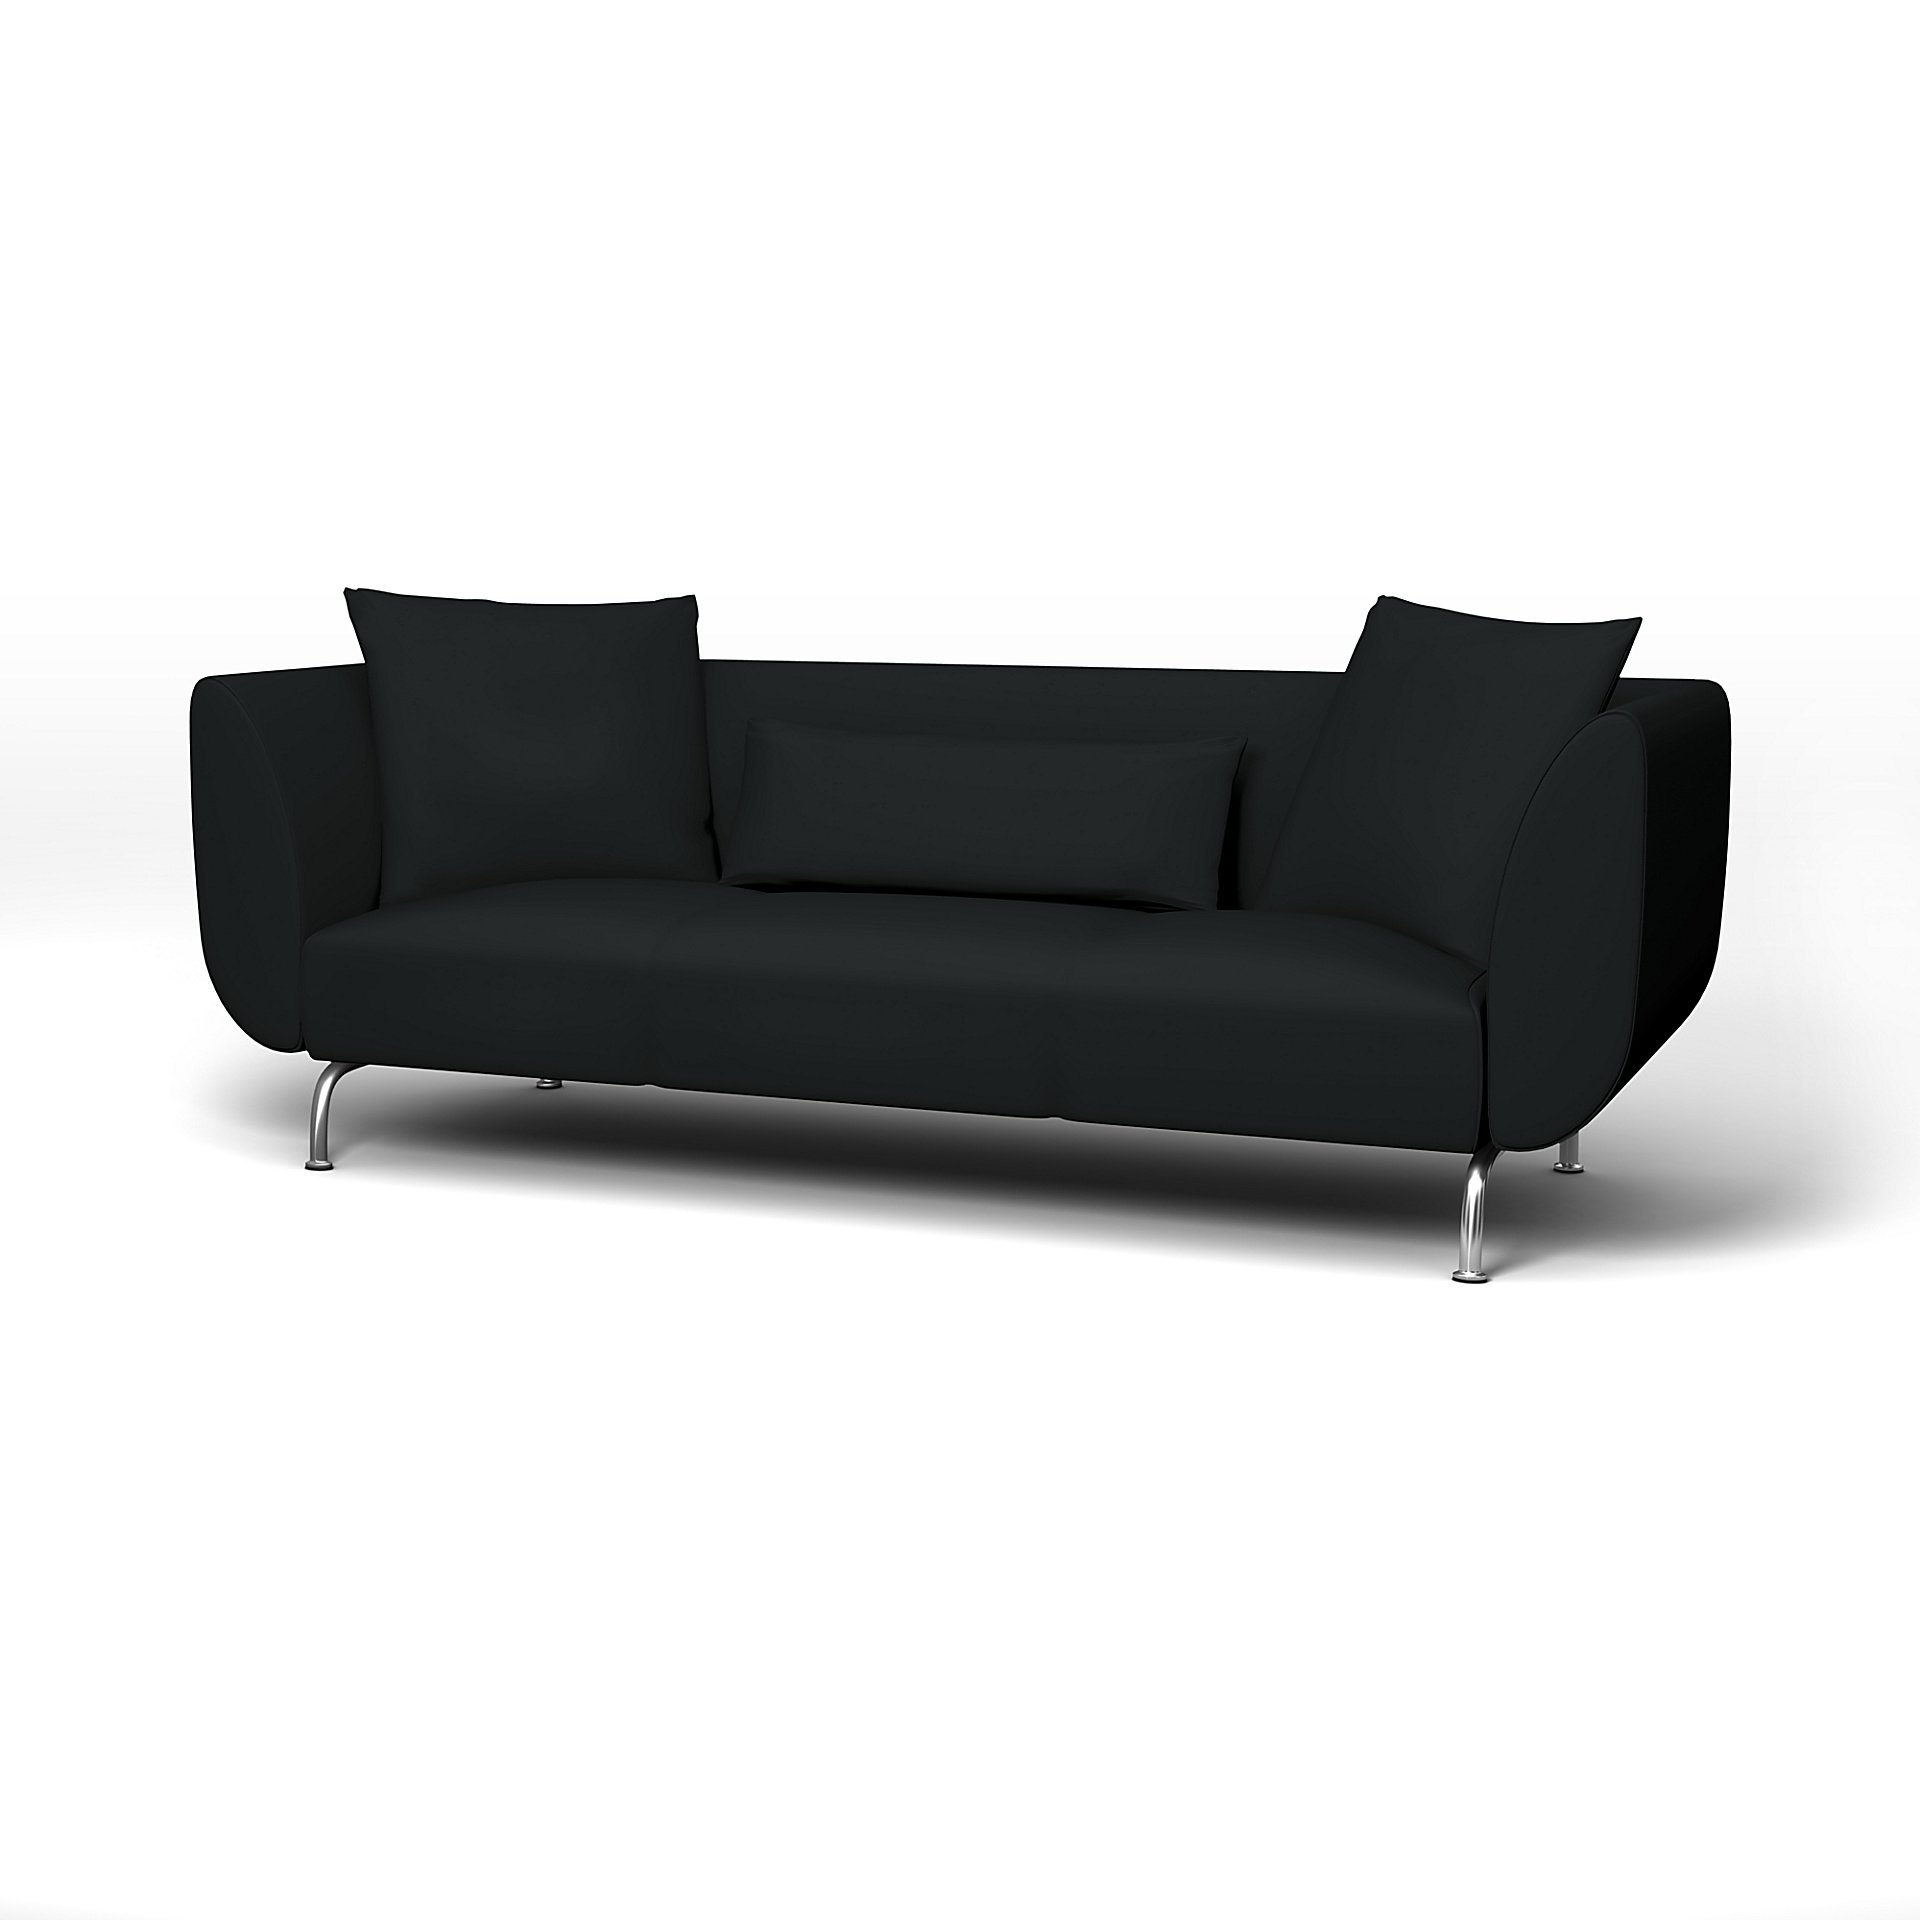 IKEA - Stromstad 3 Seater Sofa Cover, Jet Black, Cotton - Bemz